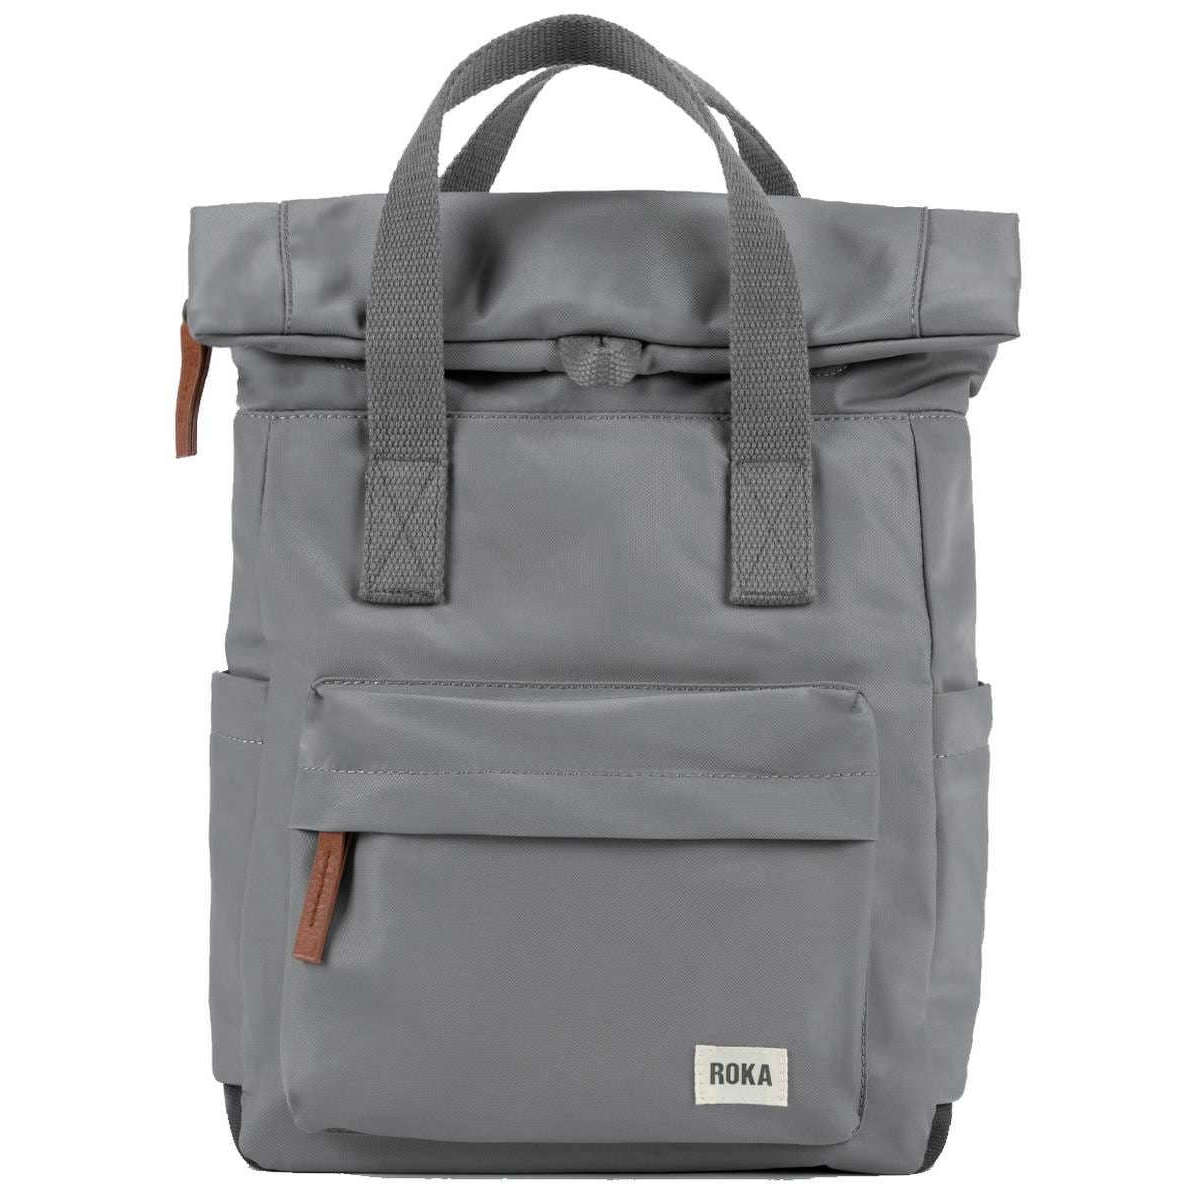 Roka Canfield B Small Sustainable Nylon Backpack - Stormy Grey